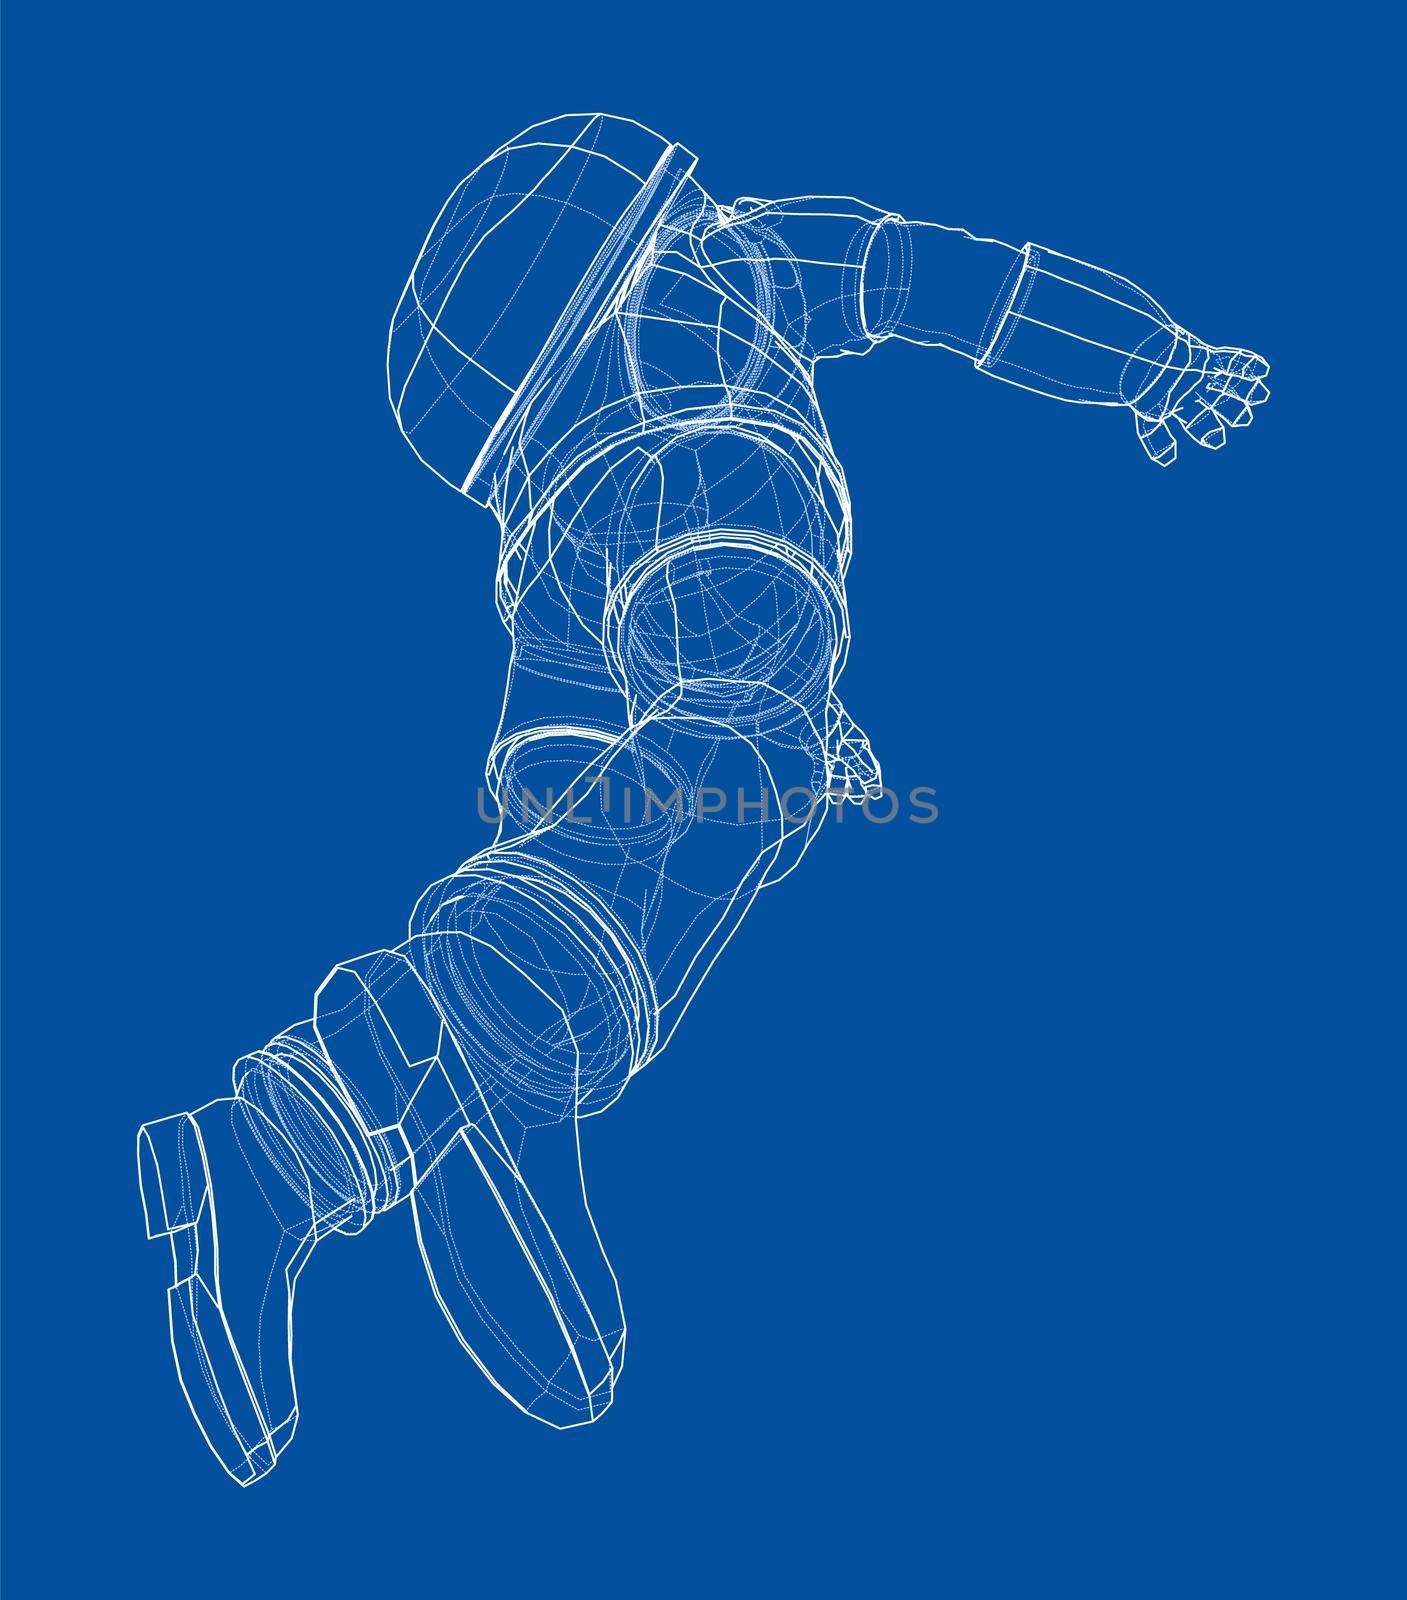 Astronaut concept. 3d illustration by cherezoff